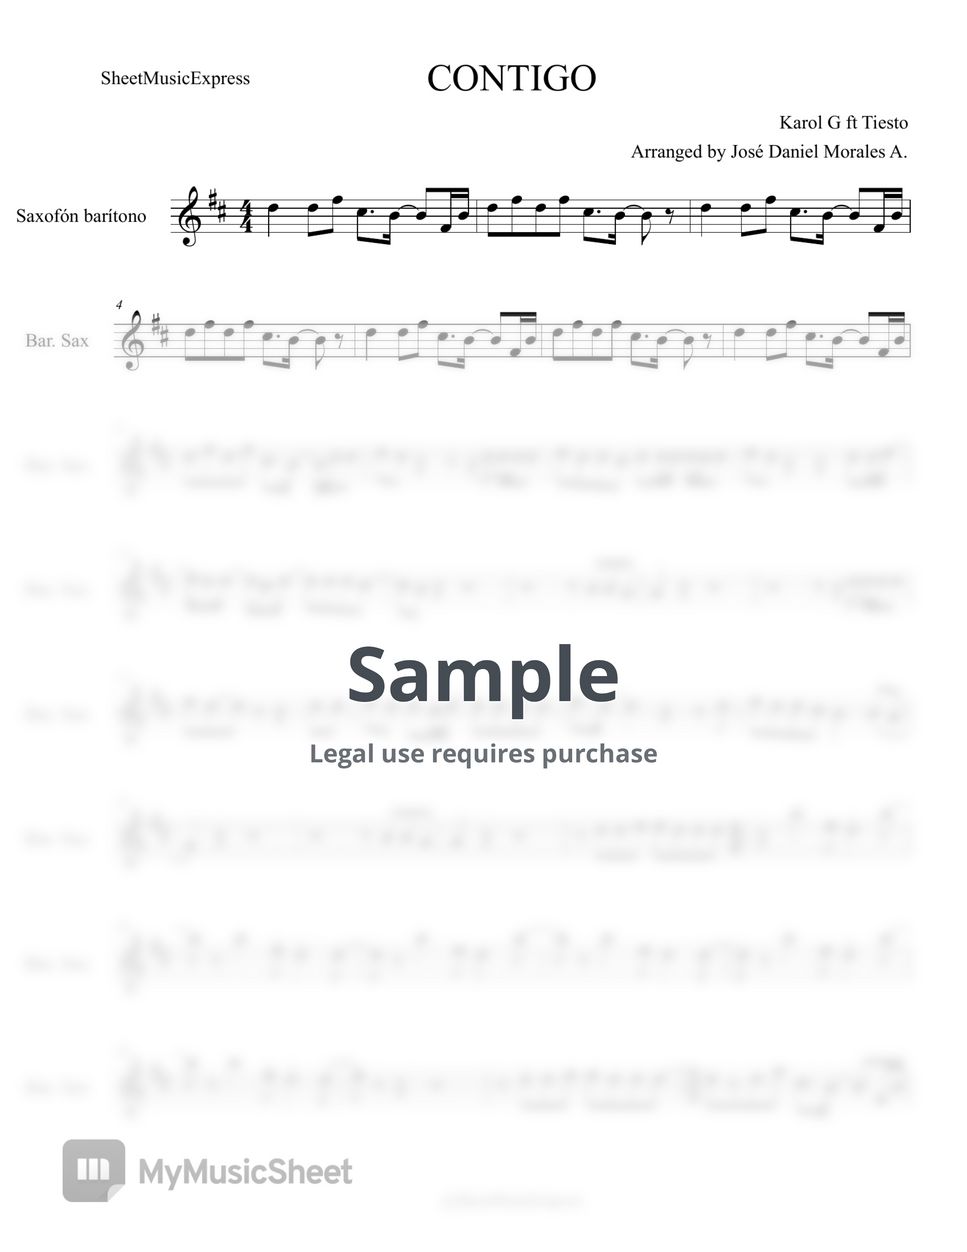 Karol G - Contigo Karol G Tiesto Sheet Music Baritone Sax (Latin) by Sheet Music Express